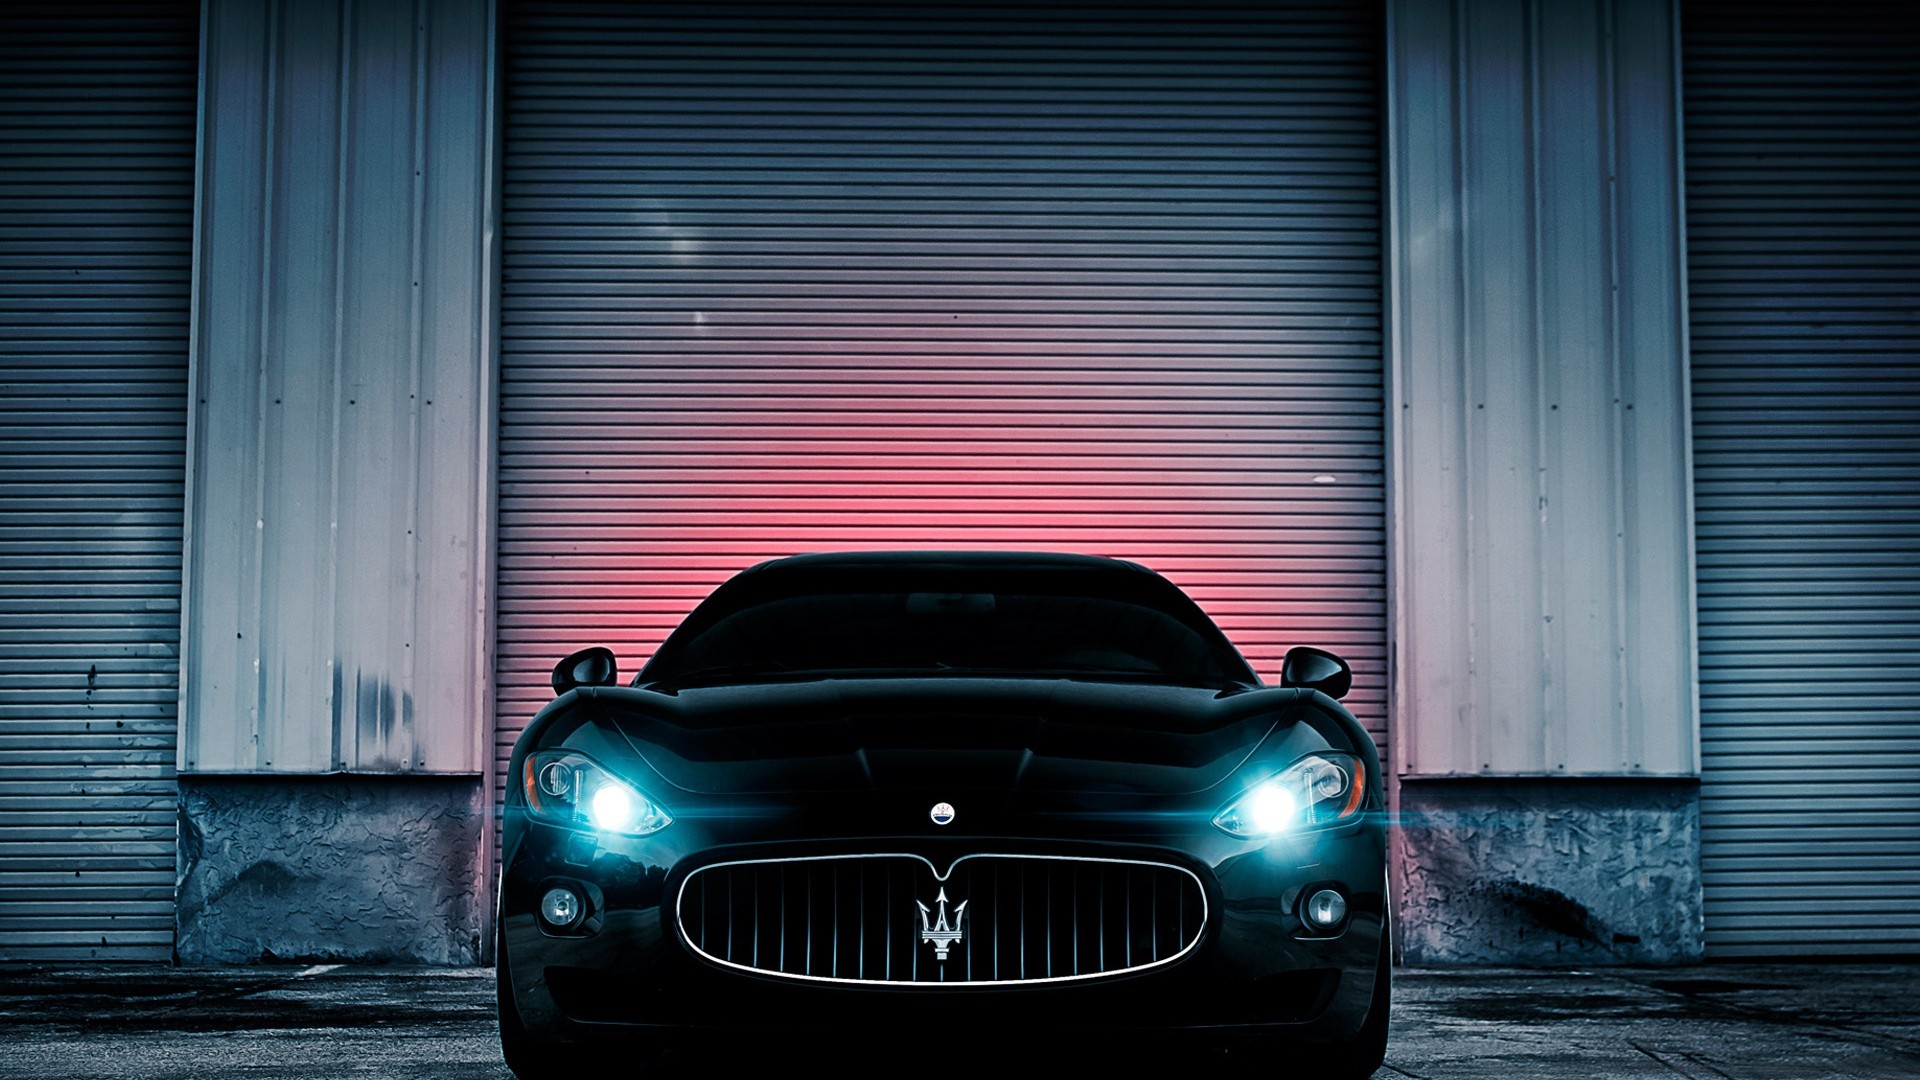 General 1920x1080 car sports car black cars Maserati Maserati GranTurismo lights urban garage building vehicle italian cars Stellantis frontal view